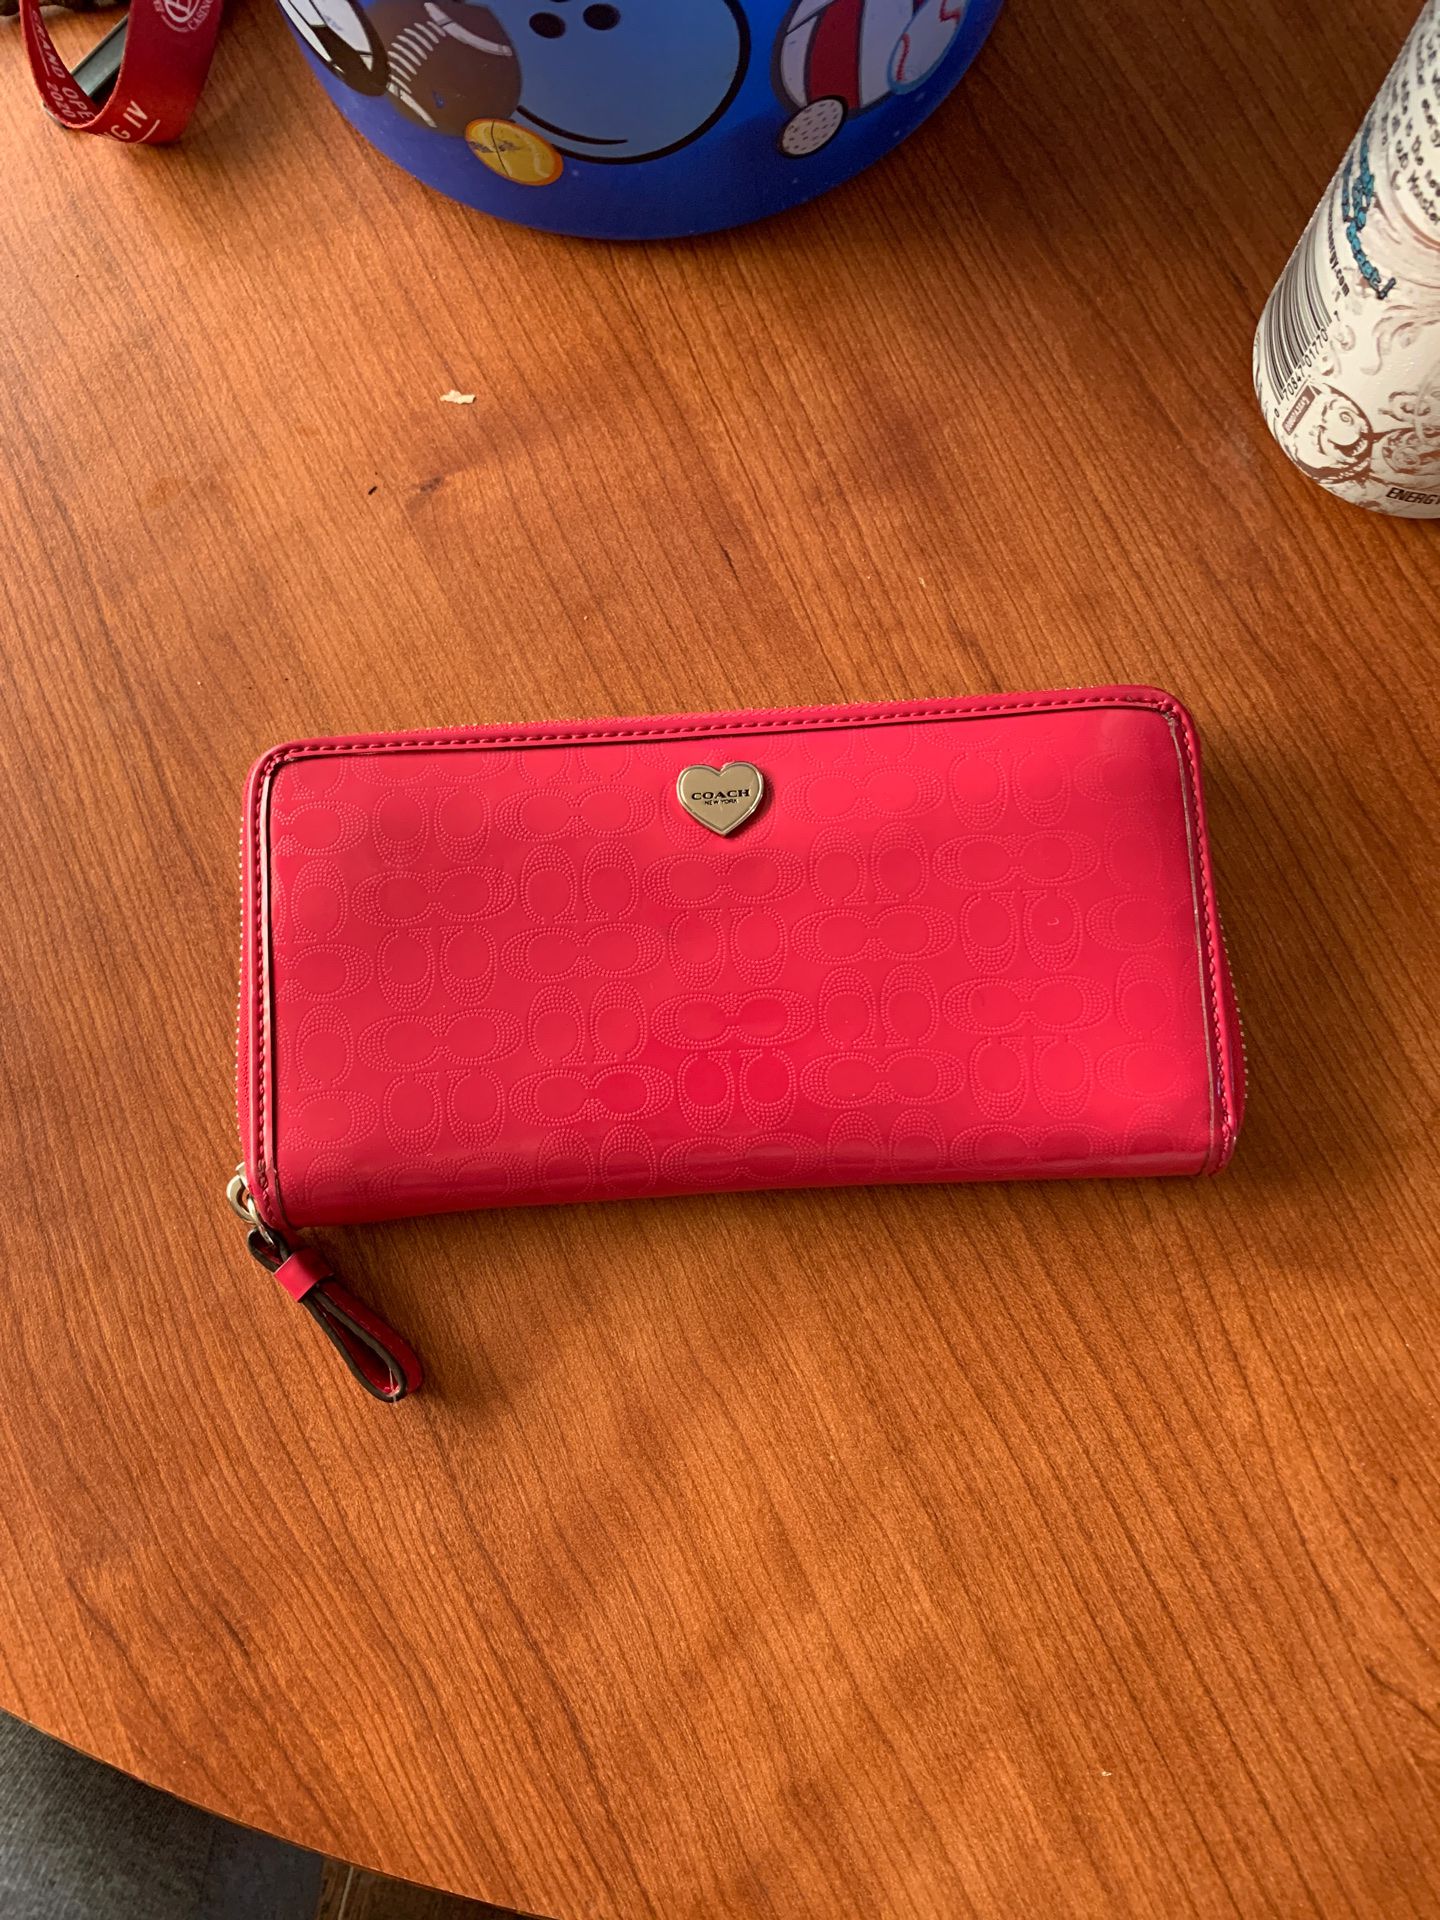 coach pink wallet